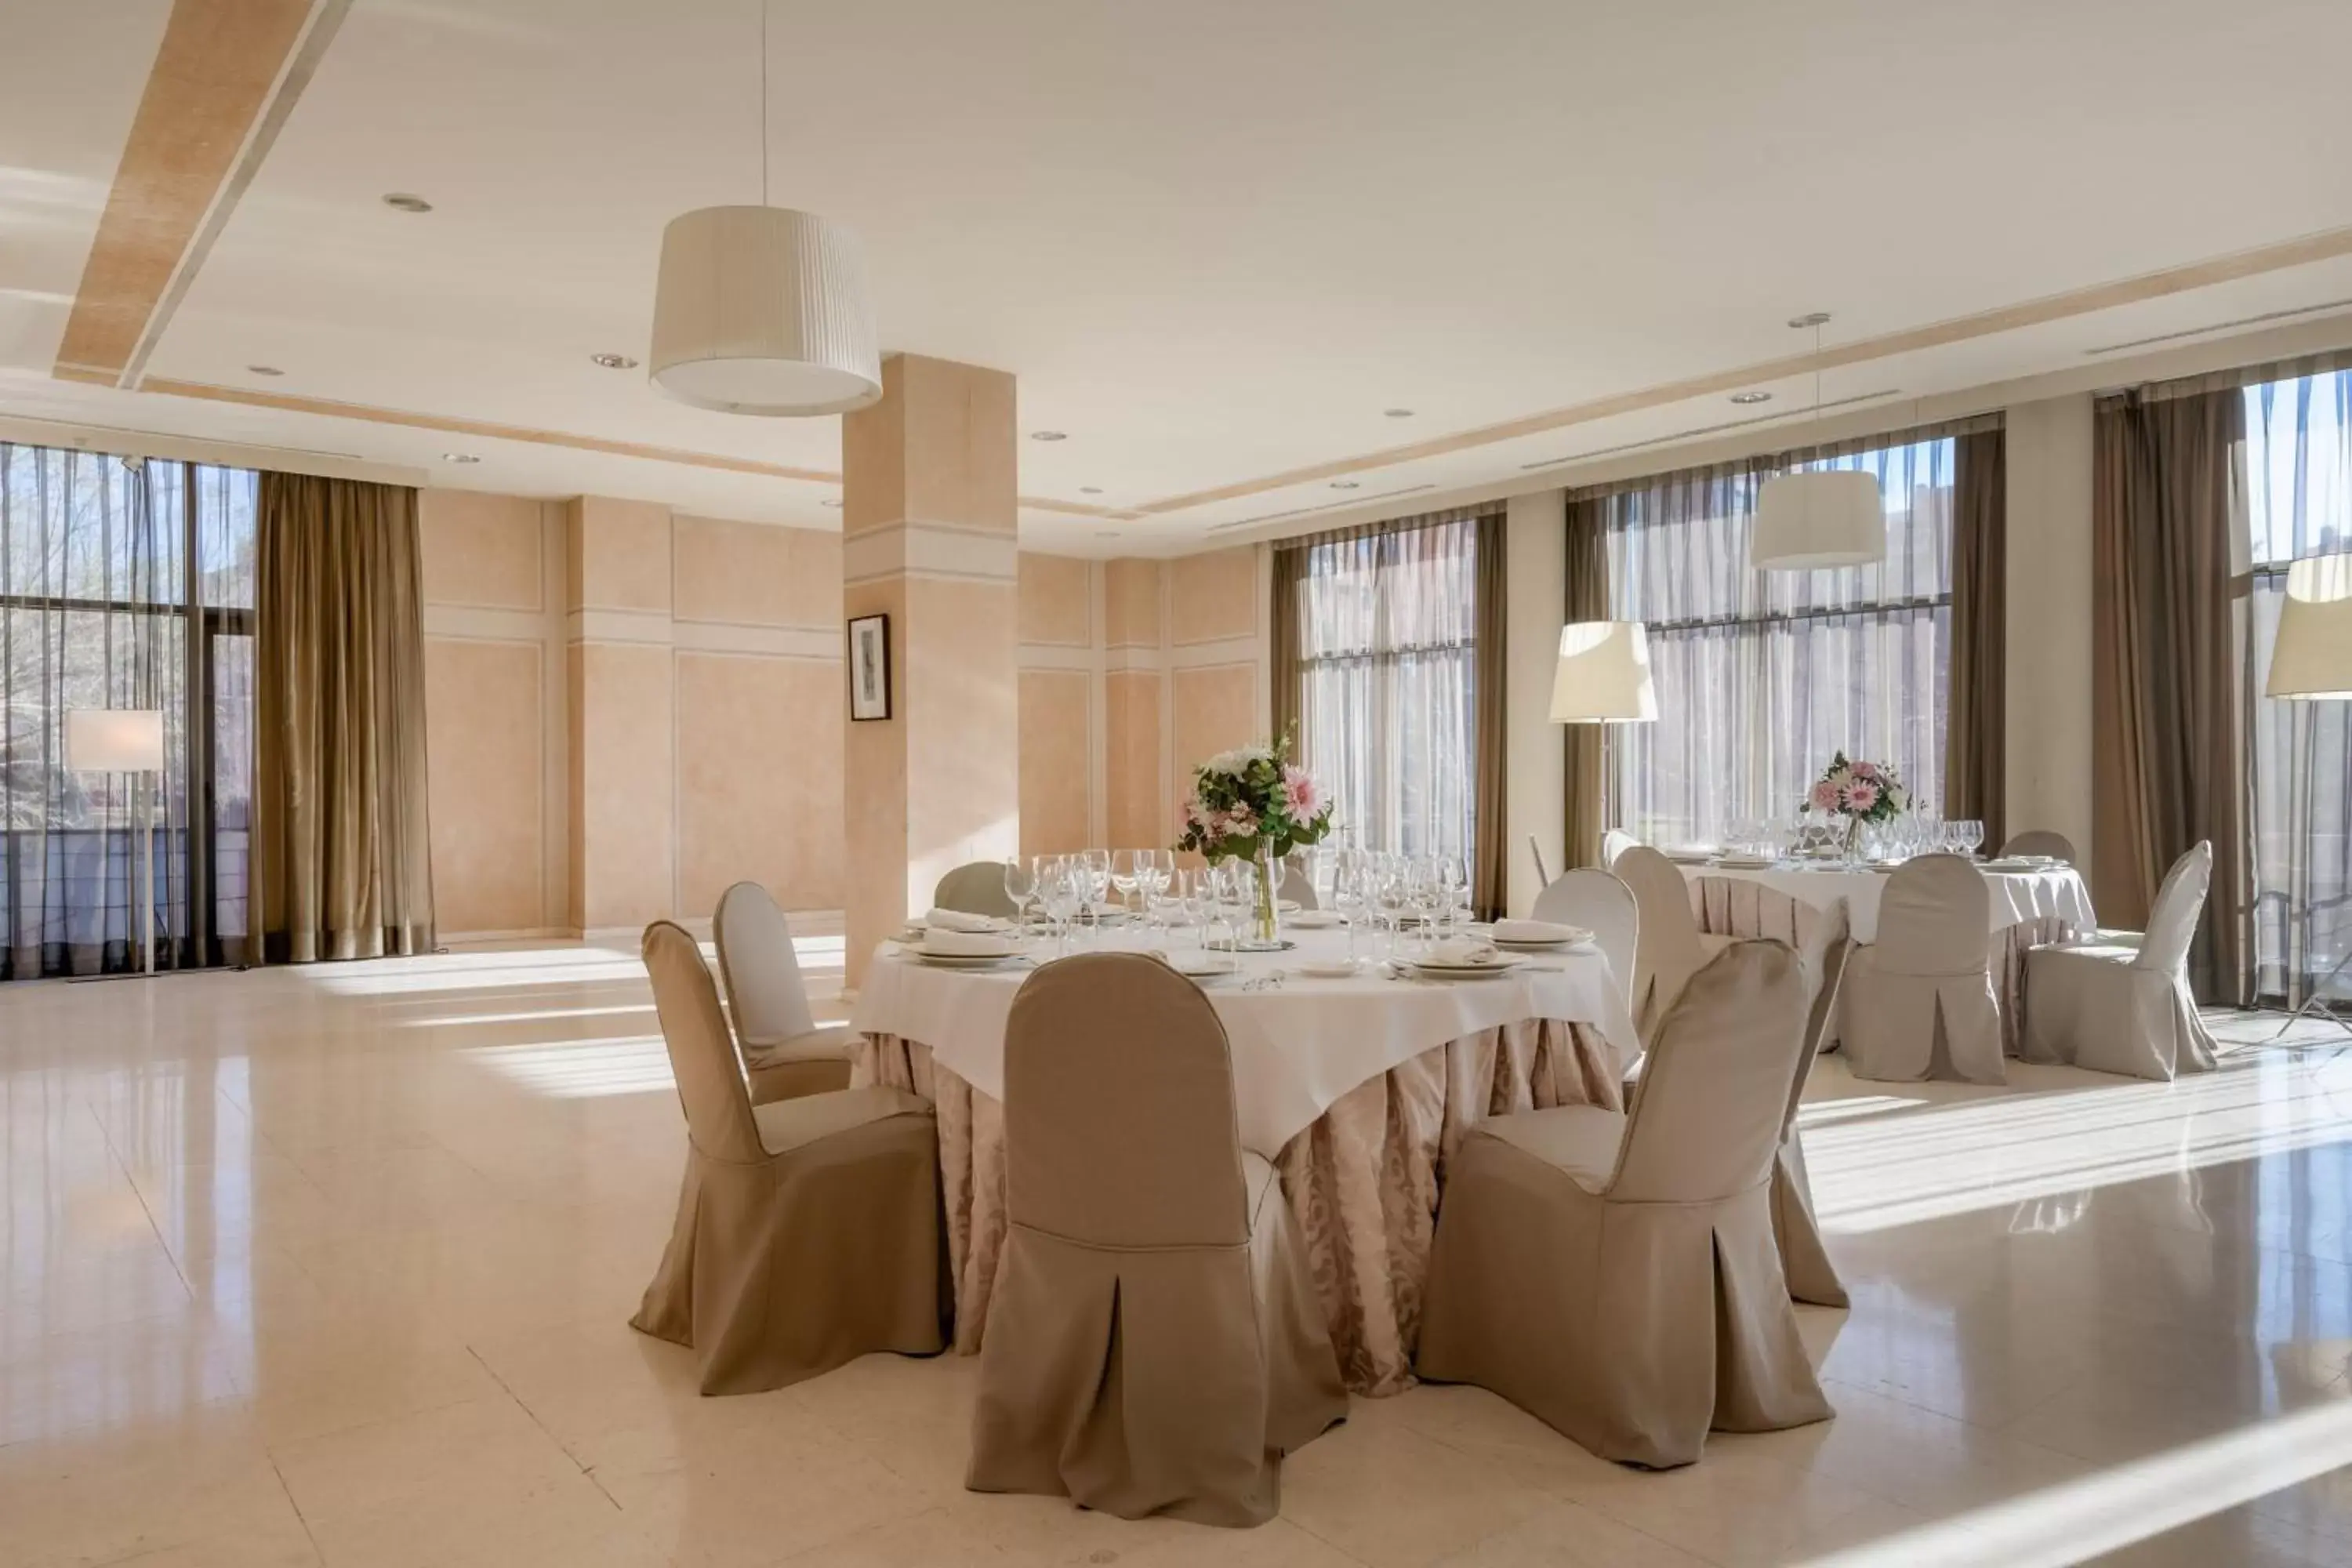 Meeting/conference room, Banquet Facilities in AC Hotel Guadalajara by Marriott, Spain